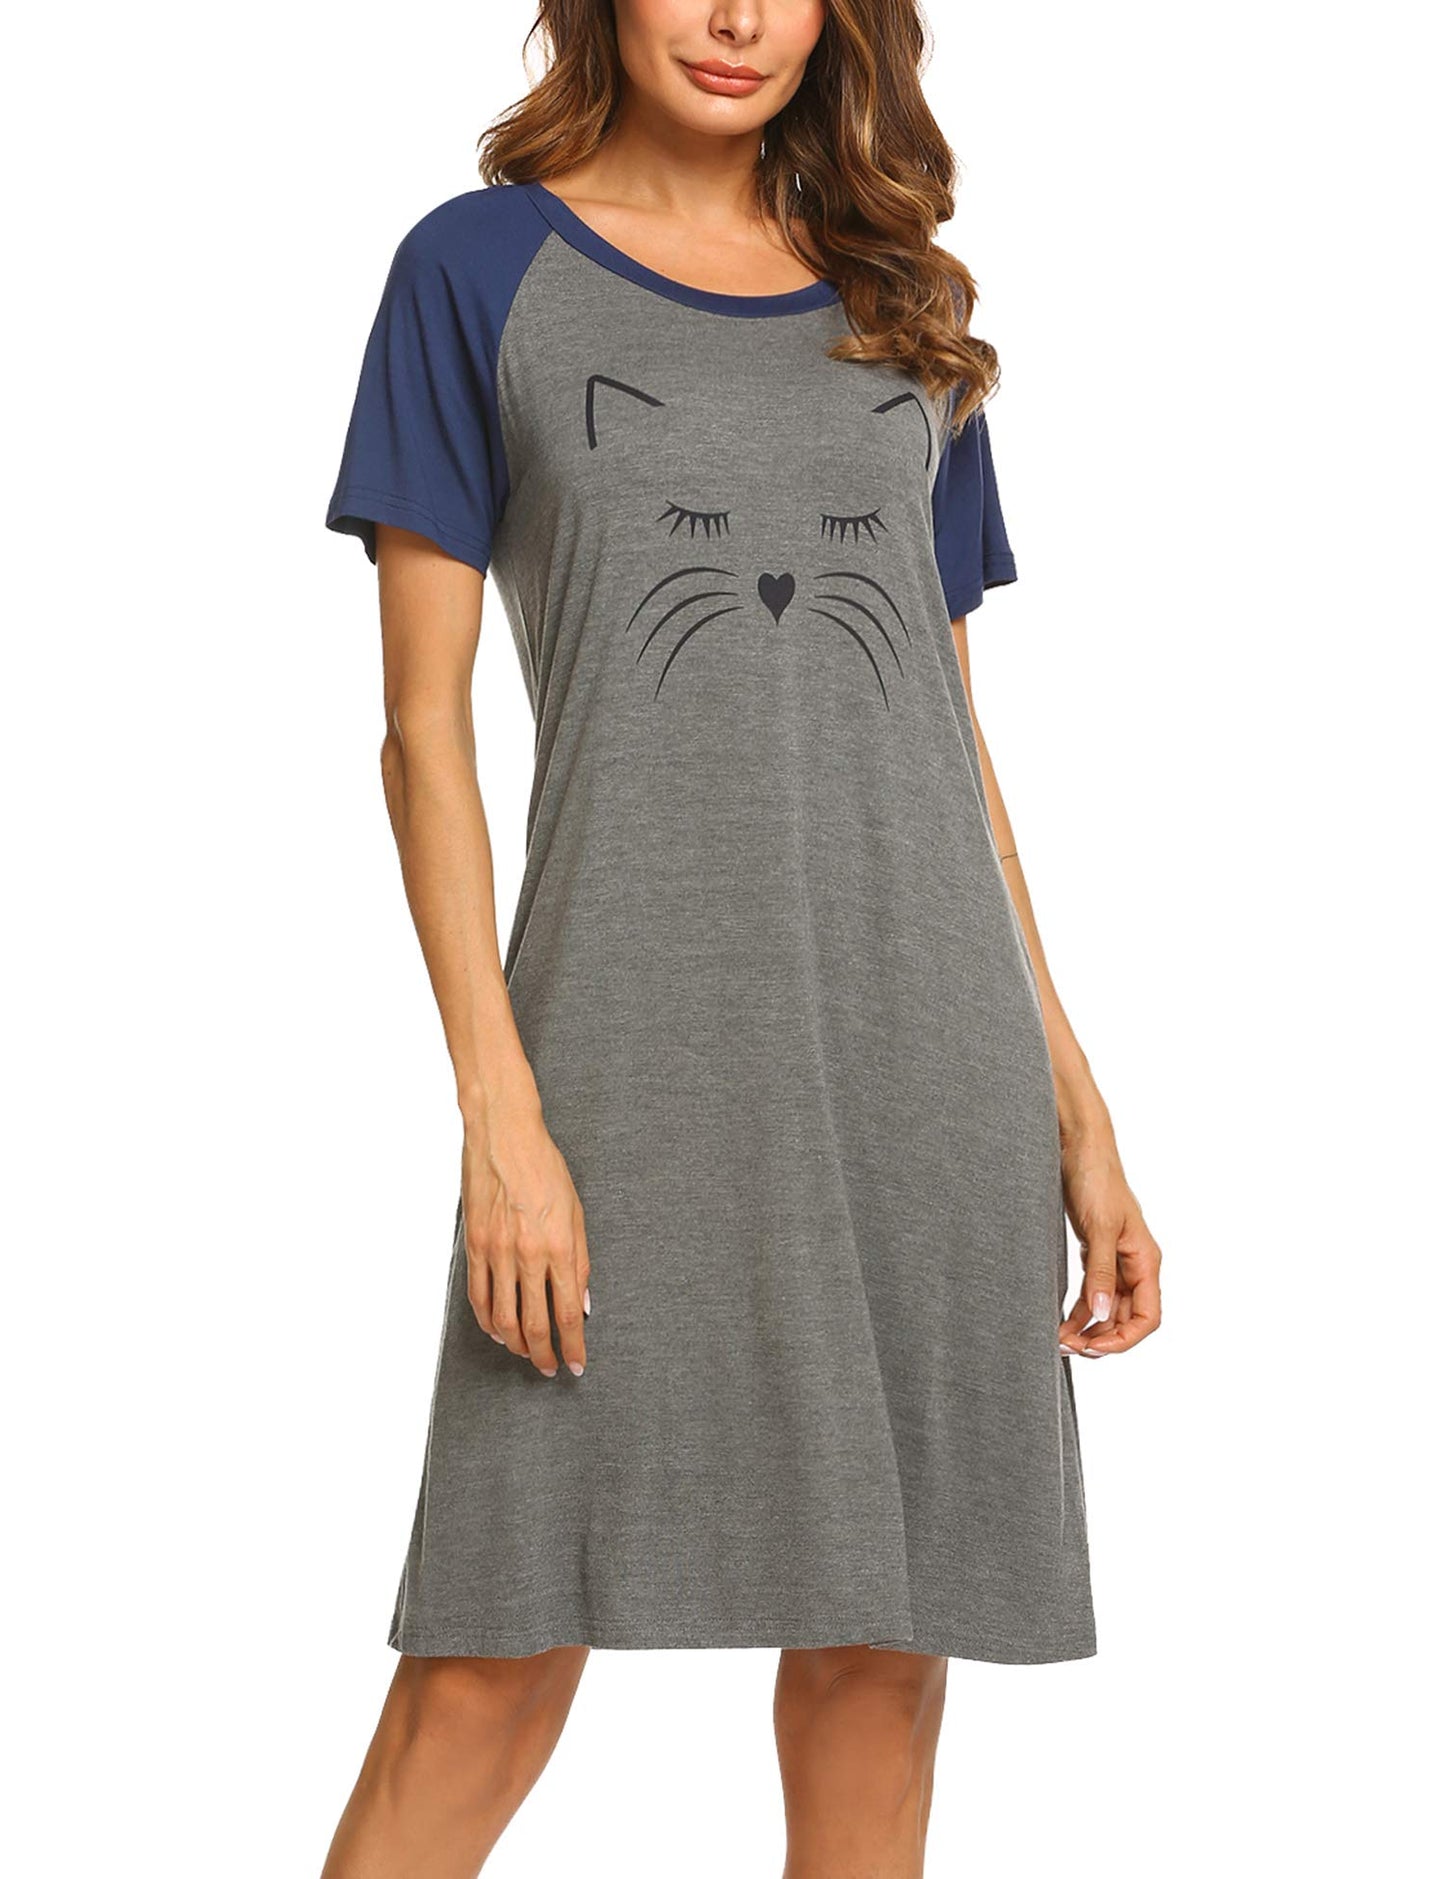 Loritta Women's Nightgown Soft Print Nightshirts for Women Short Sleeve Sleepwear